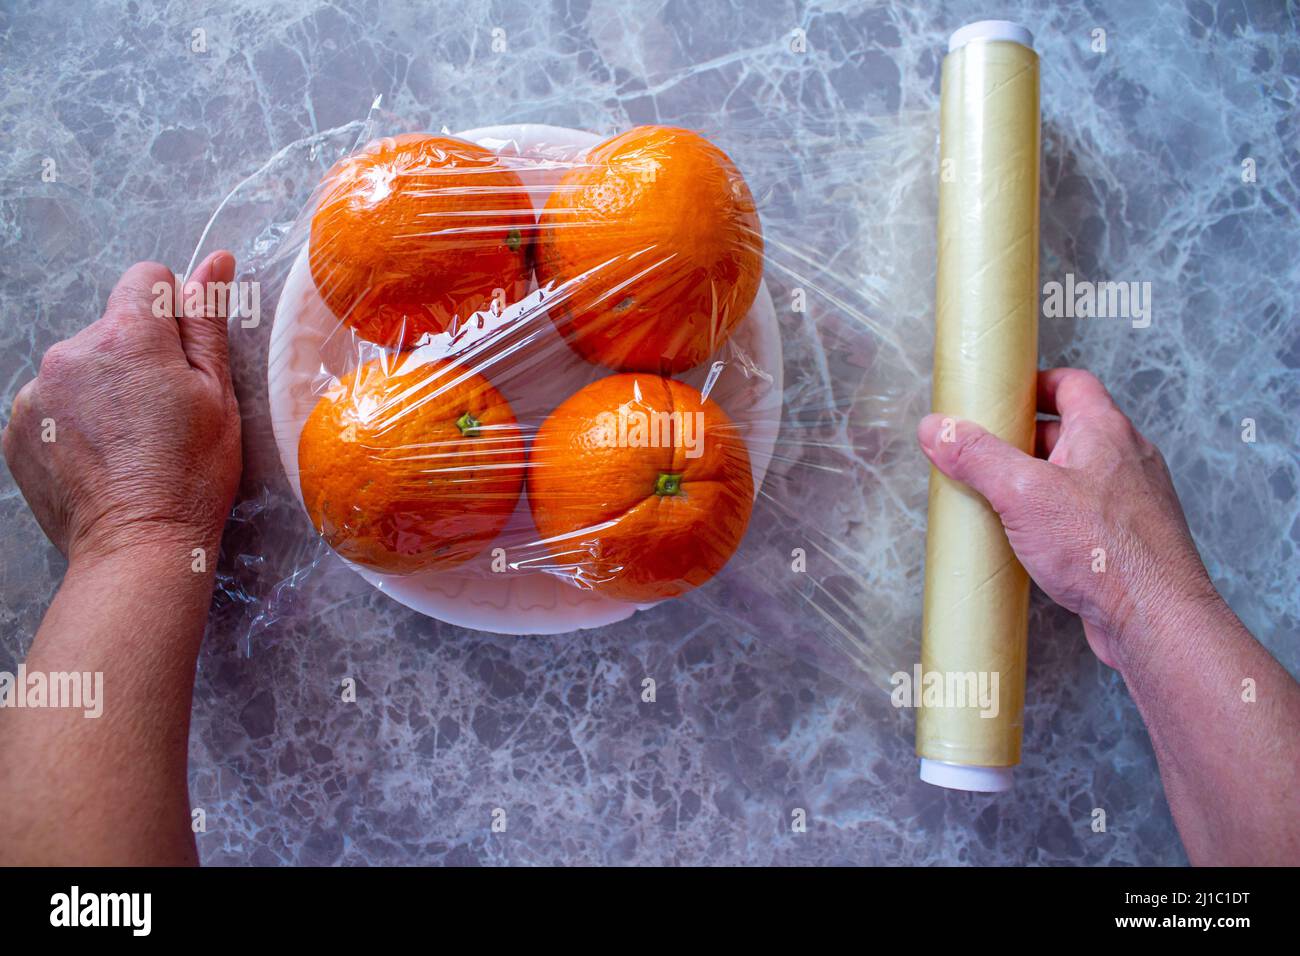 https://c8.alamy.com/comp/2J1C1DT/woman-is-holding-packaged-orange-fruits-in-hand-using-food-film-for-fruits-storage-in-fridge-food-storage-concept-2J1C1DT.jpg